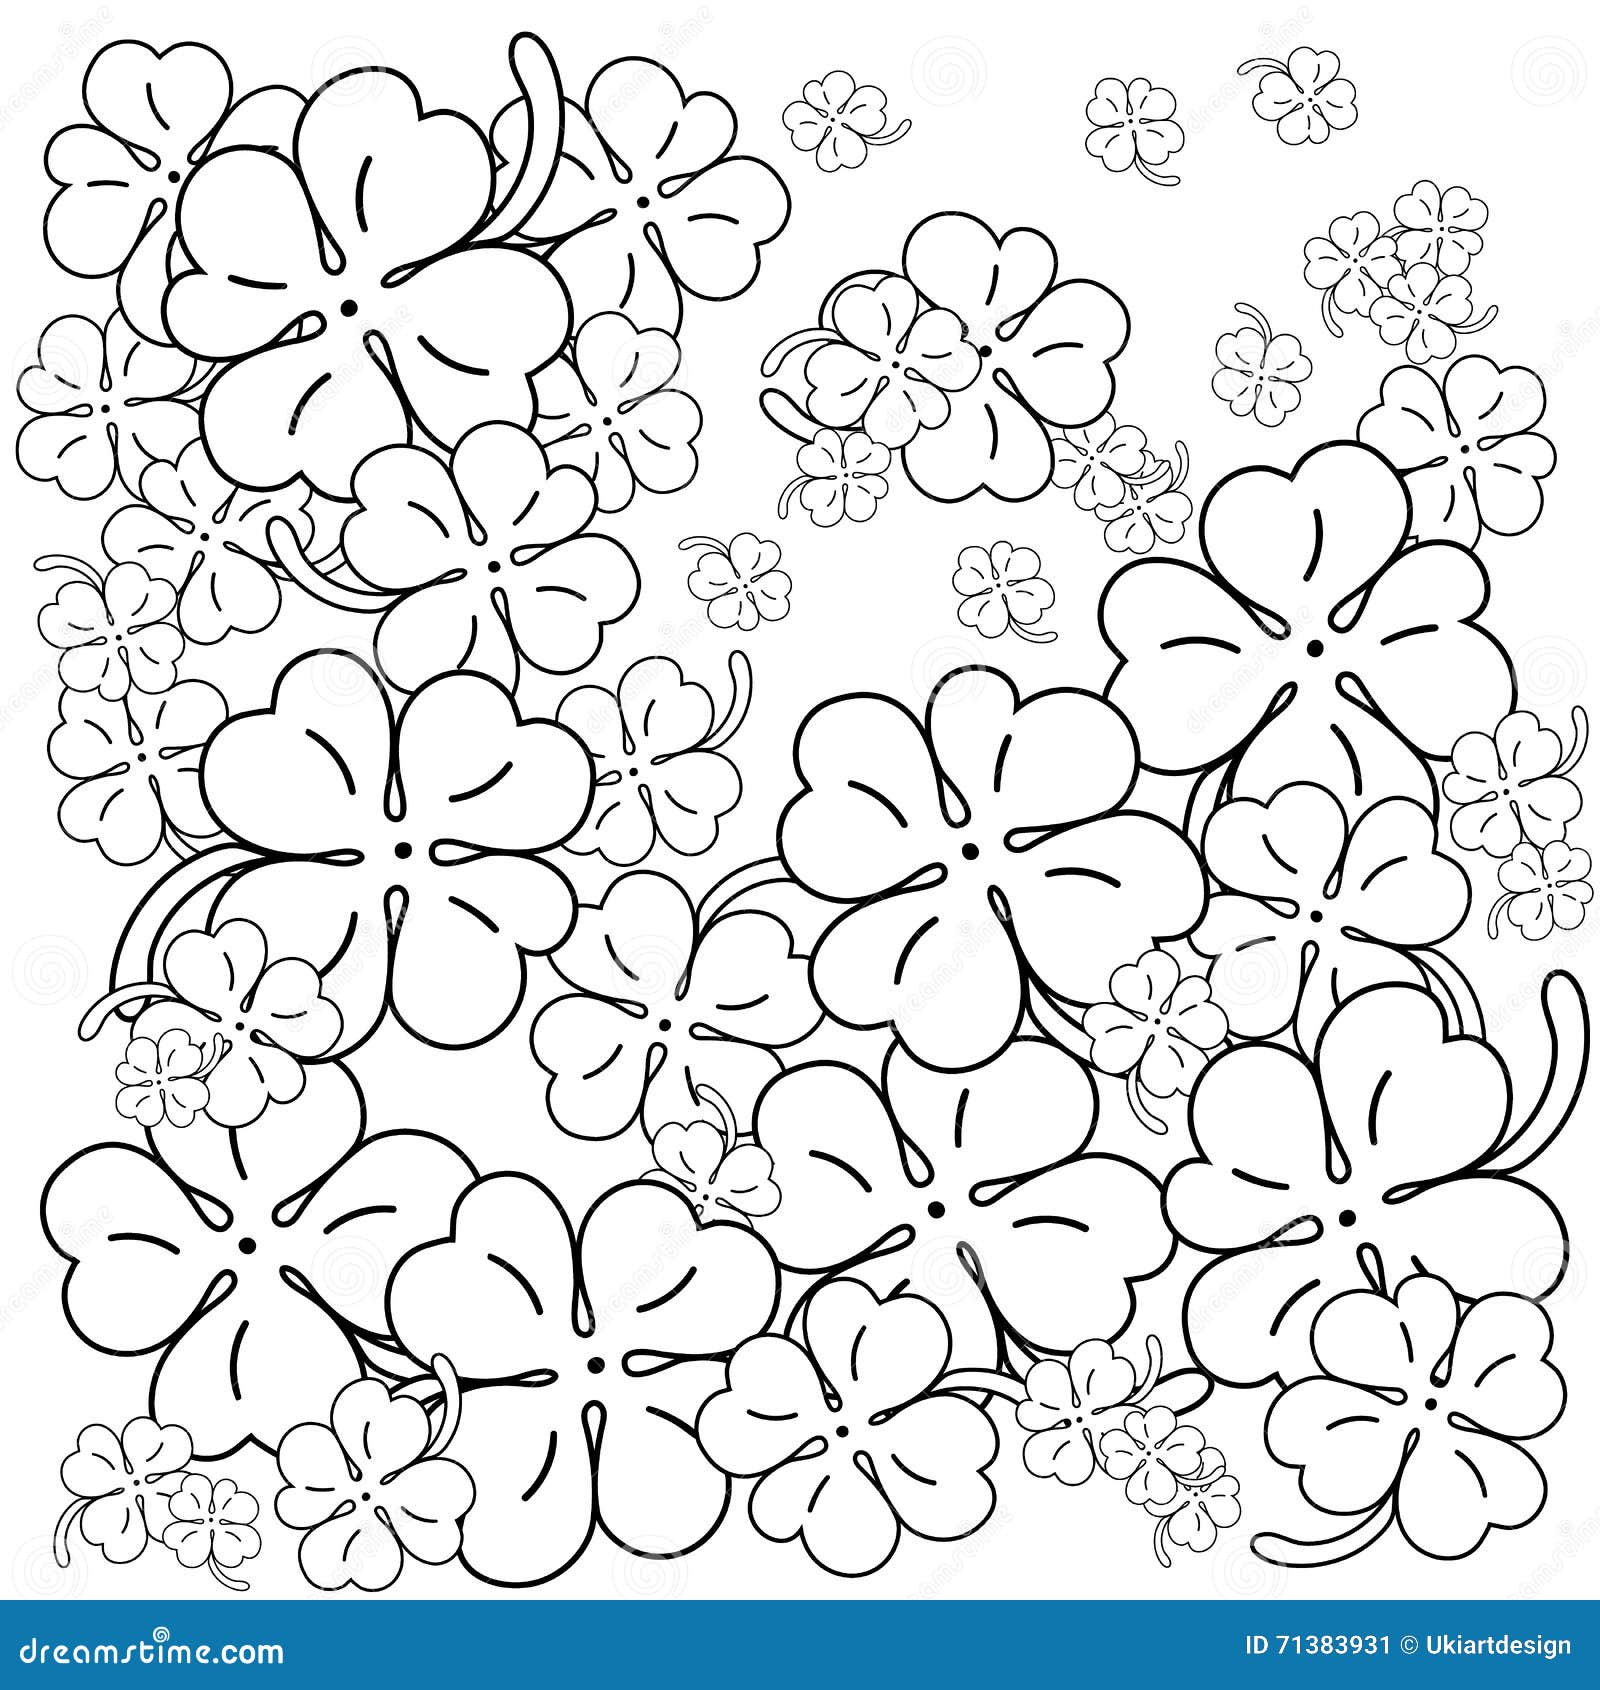 stock illustration adult coloring book page four leaf clovers hand drawn vector illustration black white line art image